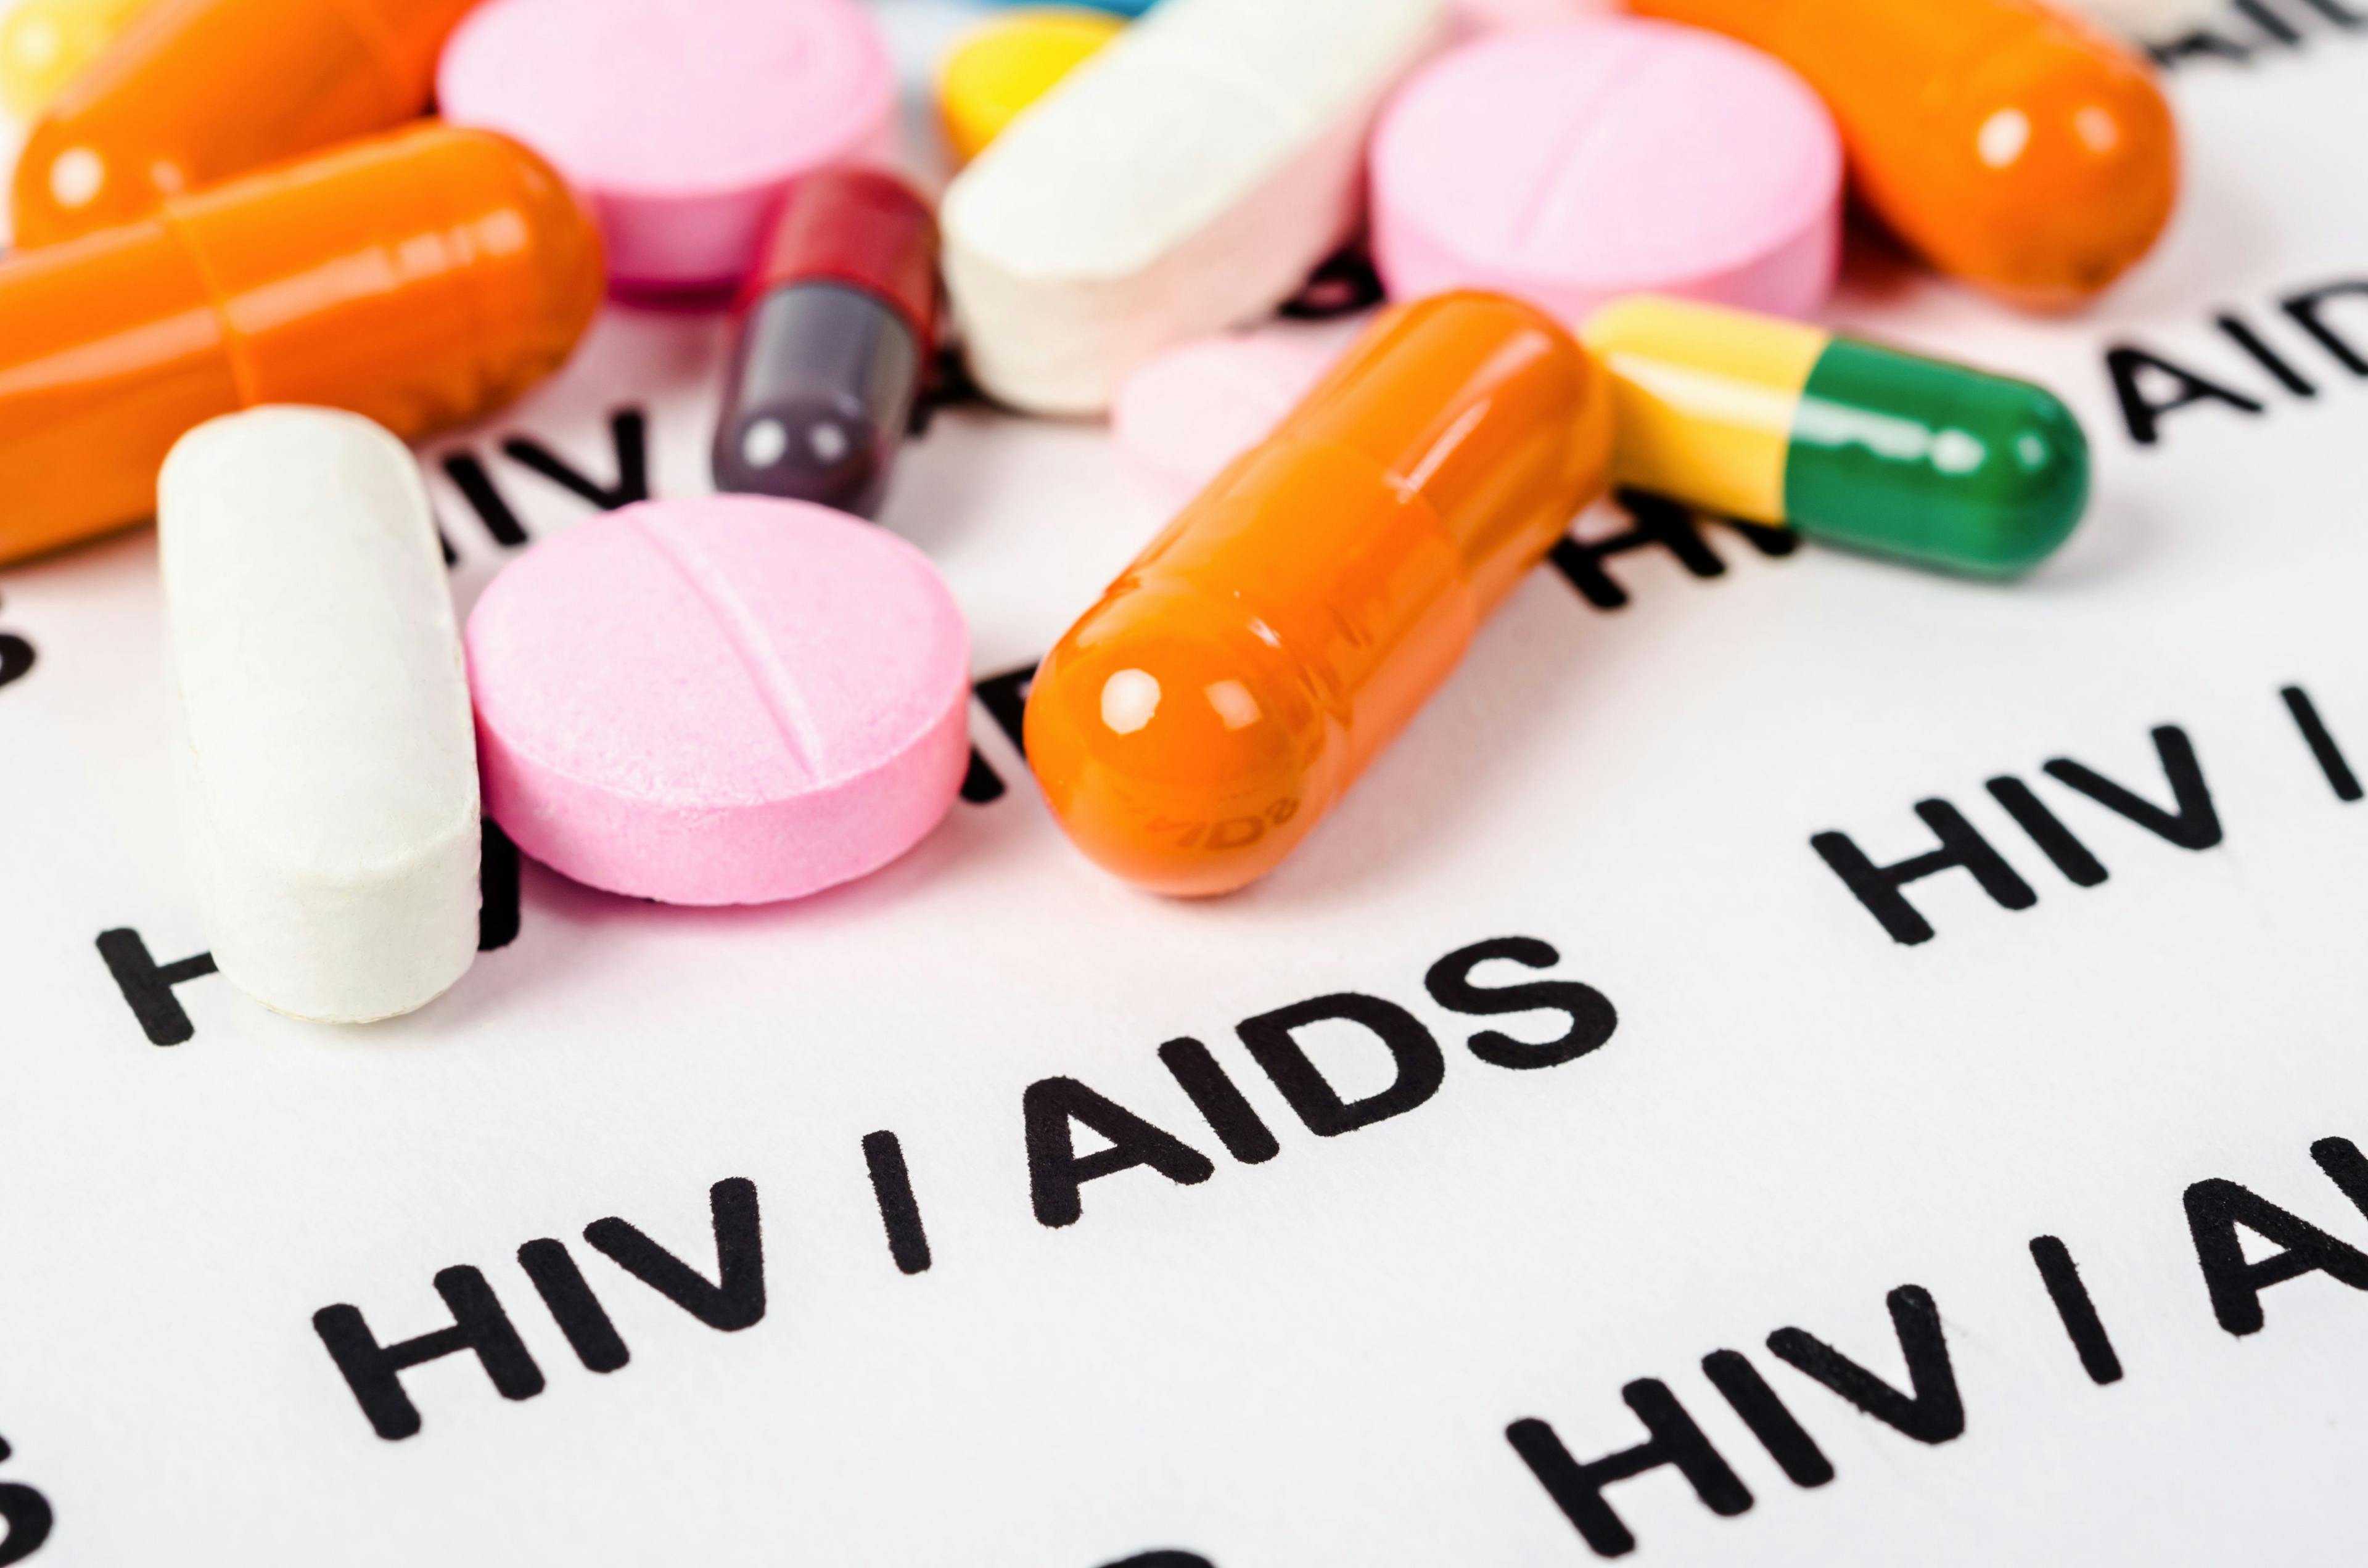 Generic Triumeq PD, a First-line HIV Medication For Children, Gets Tentative OK